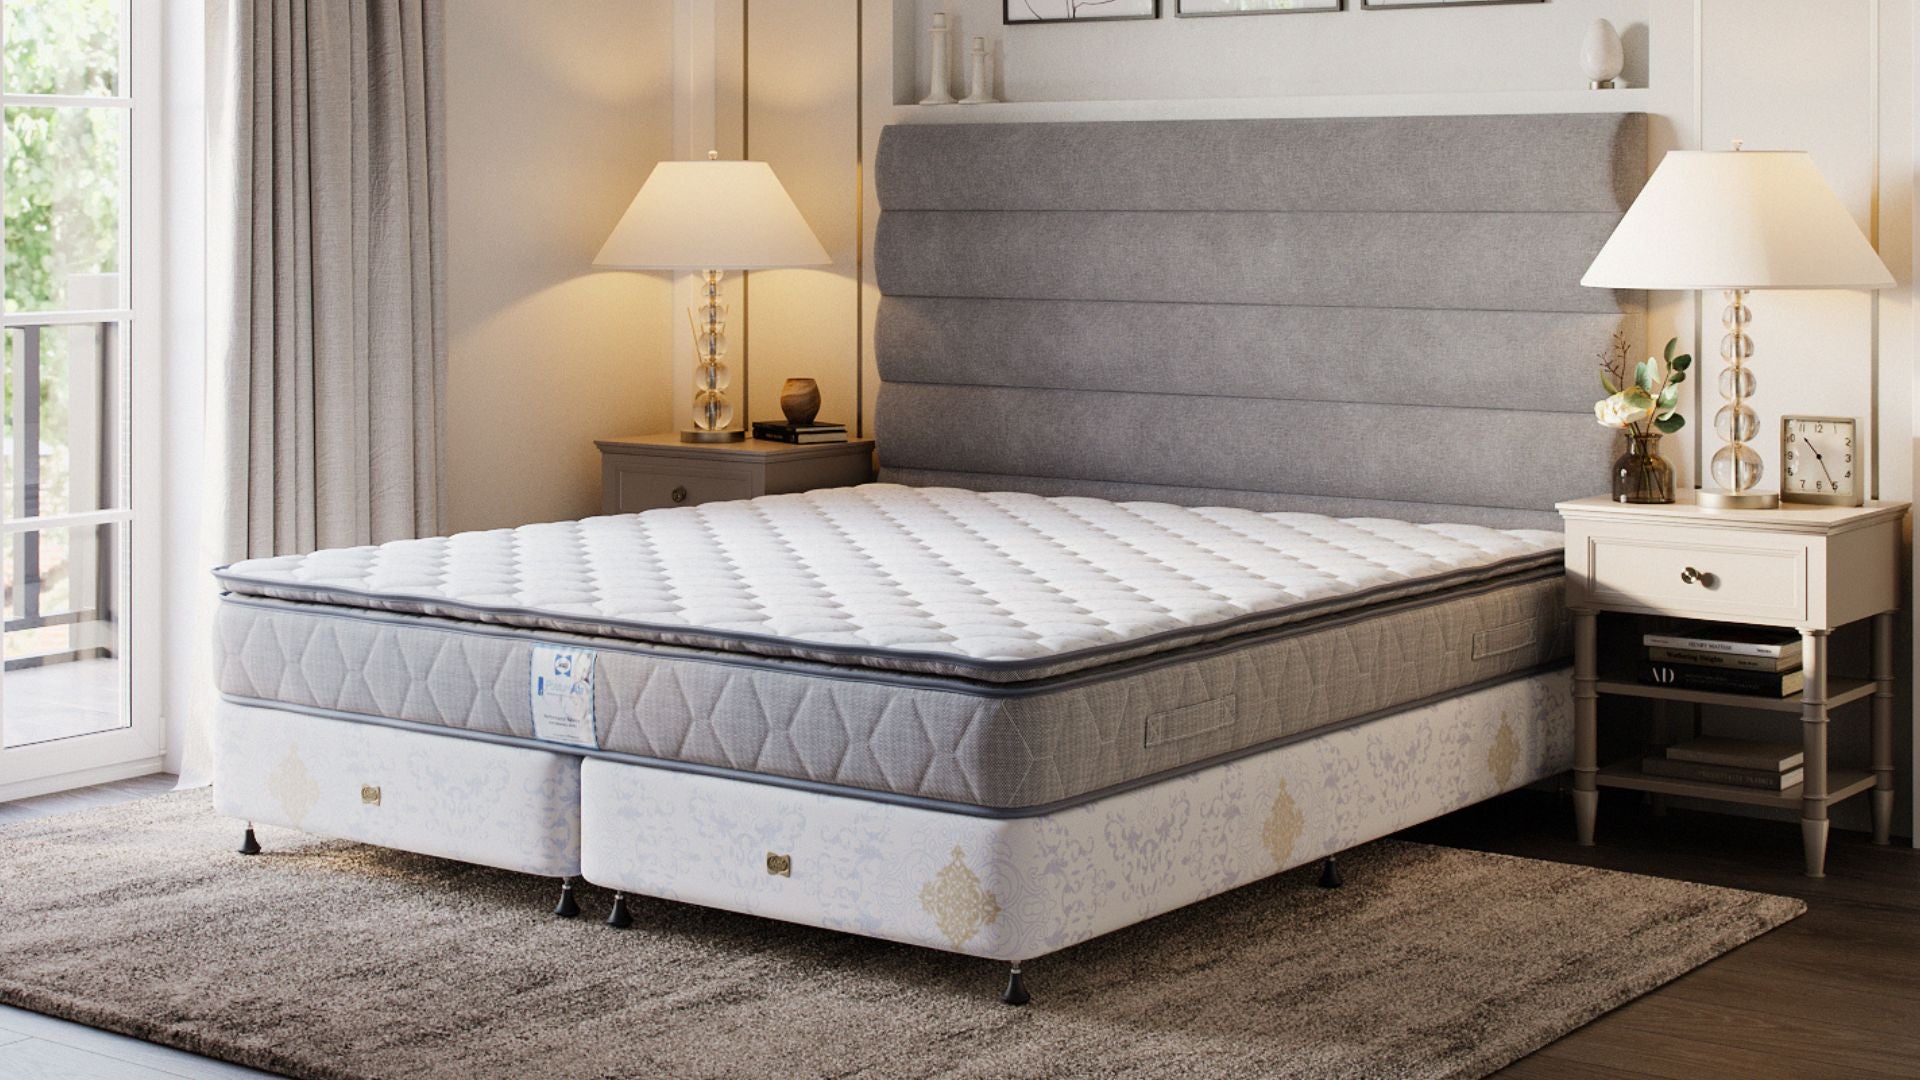 Sealy mattress India